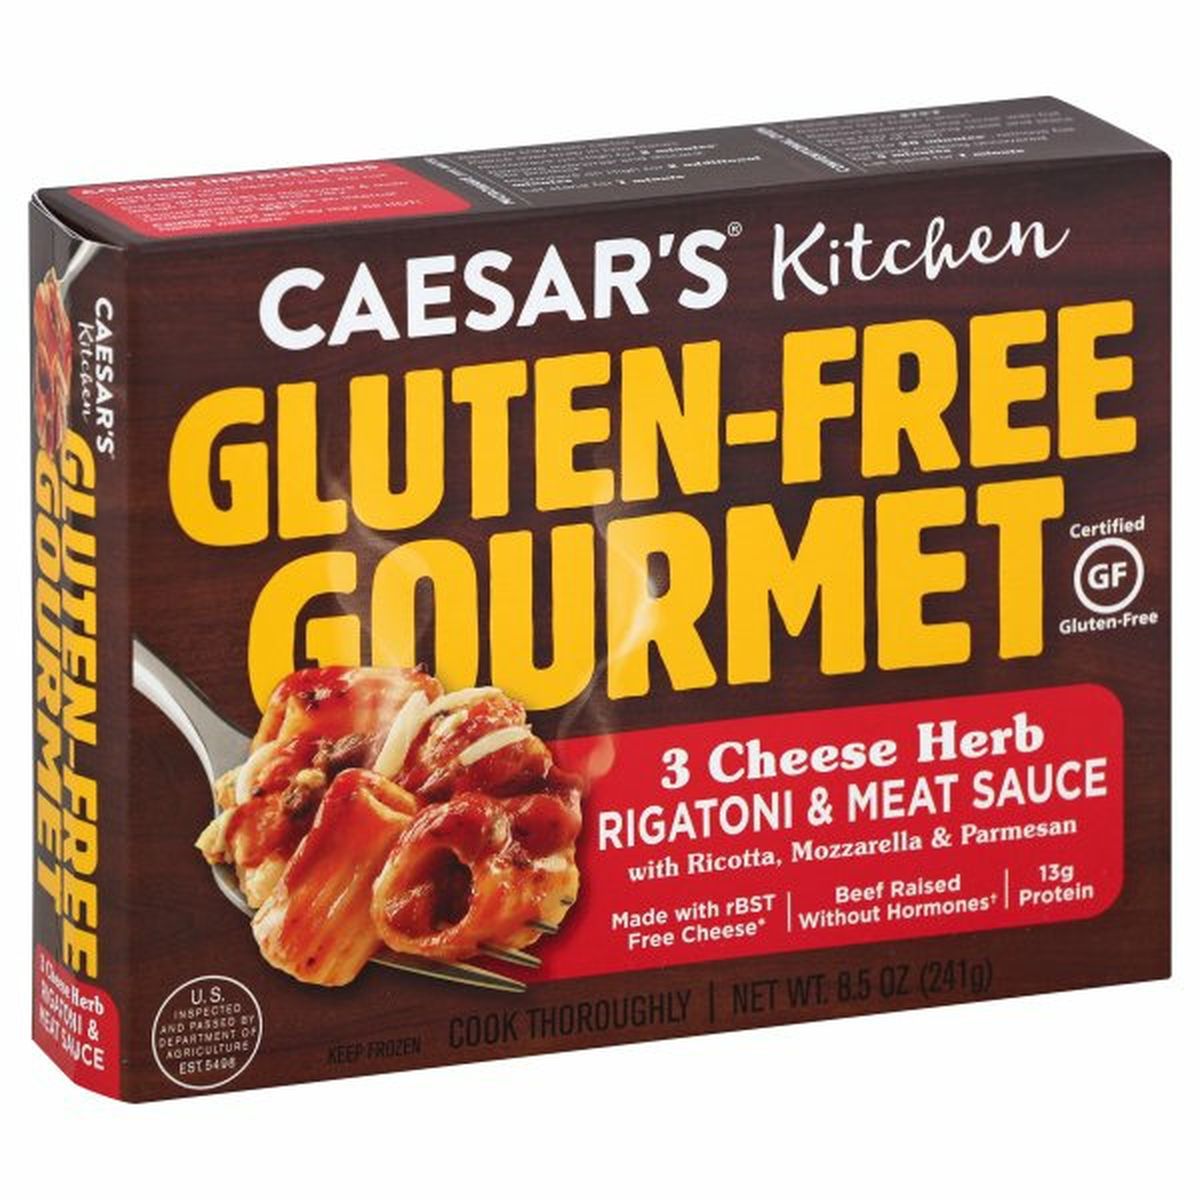 Calories in Caesars Kitchen Rigatoni & Meat Sauce, Gluten-Free, 3 Cheese Herb